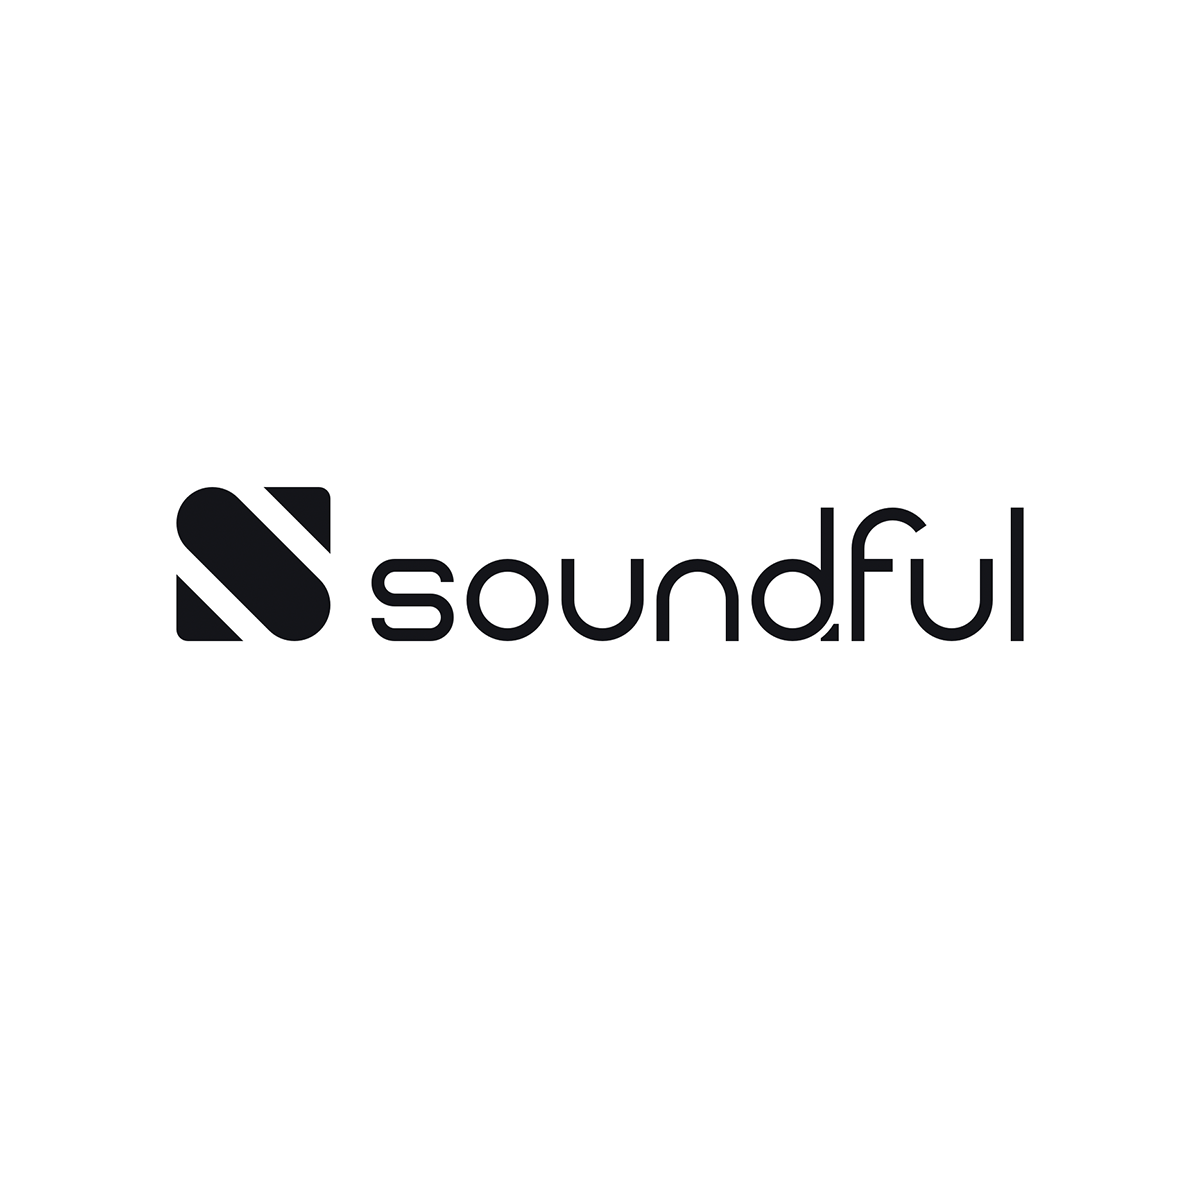 United States 营销公司 smartboost 通过 SEO 和数字营销帮助了 Soundful 发展业务